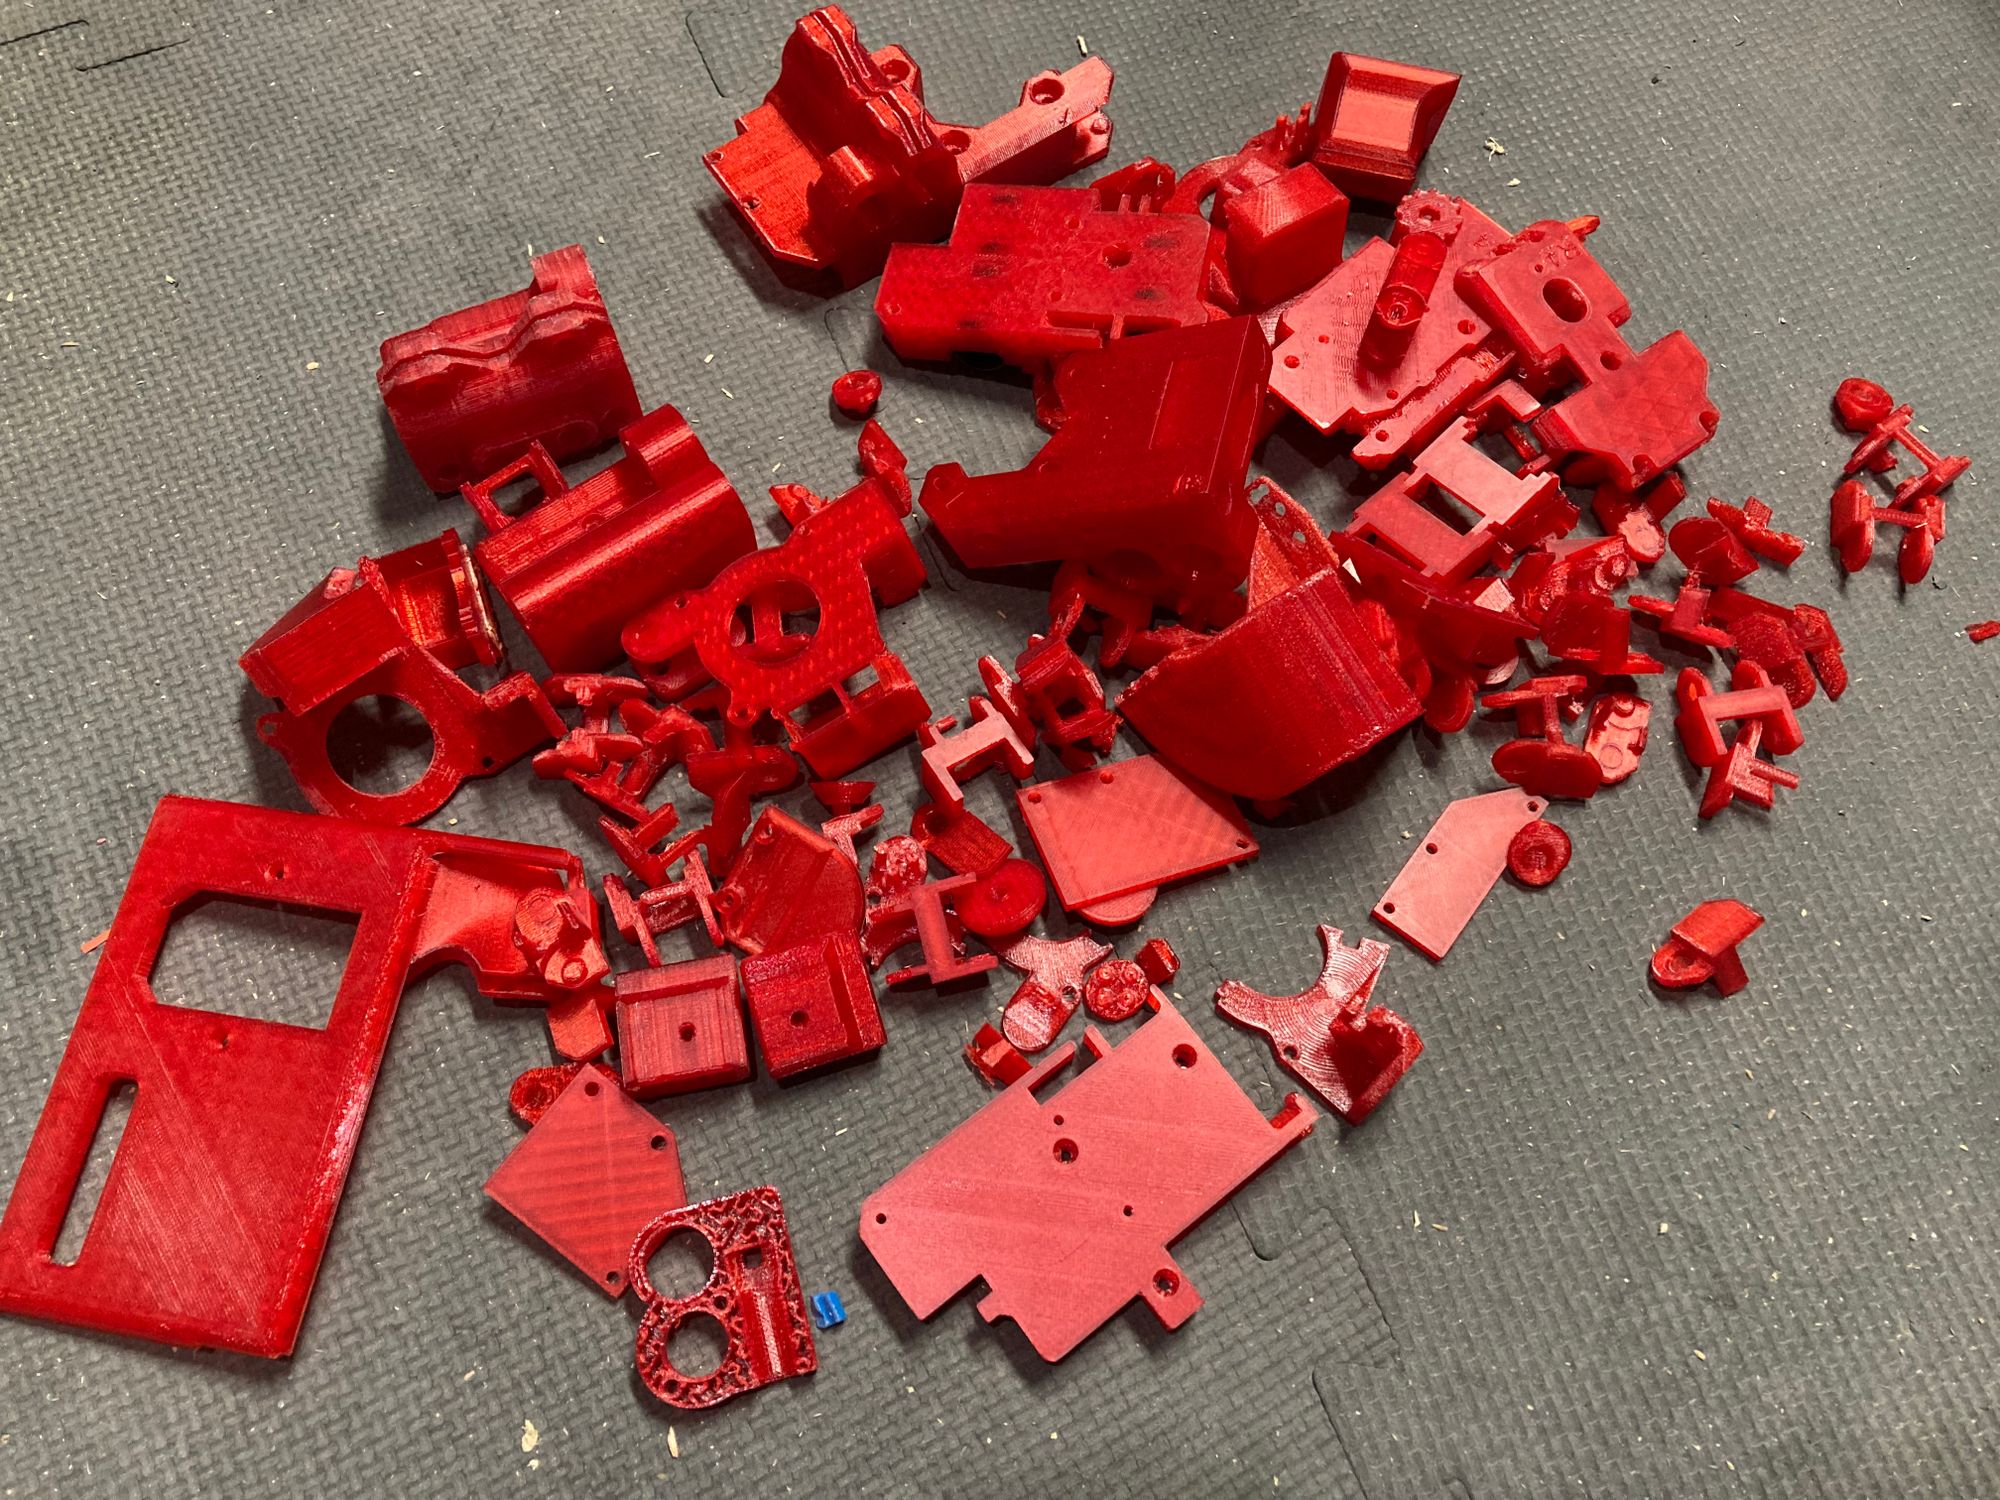 Makerfront Rebuild Part 2: Printed Parts?